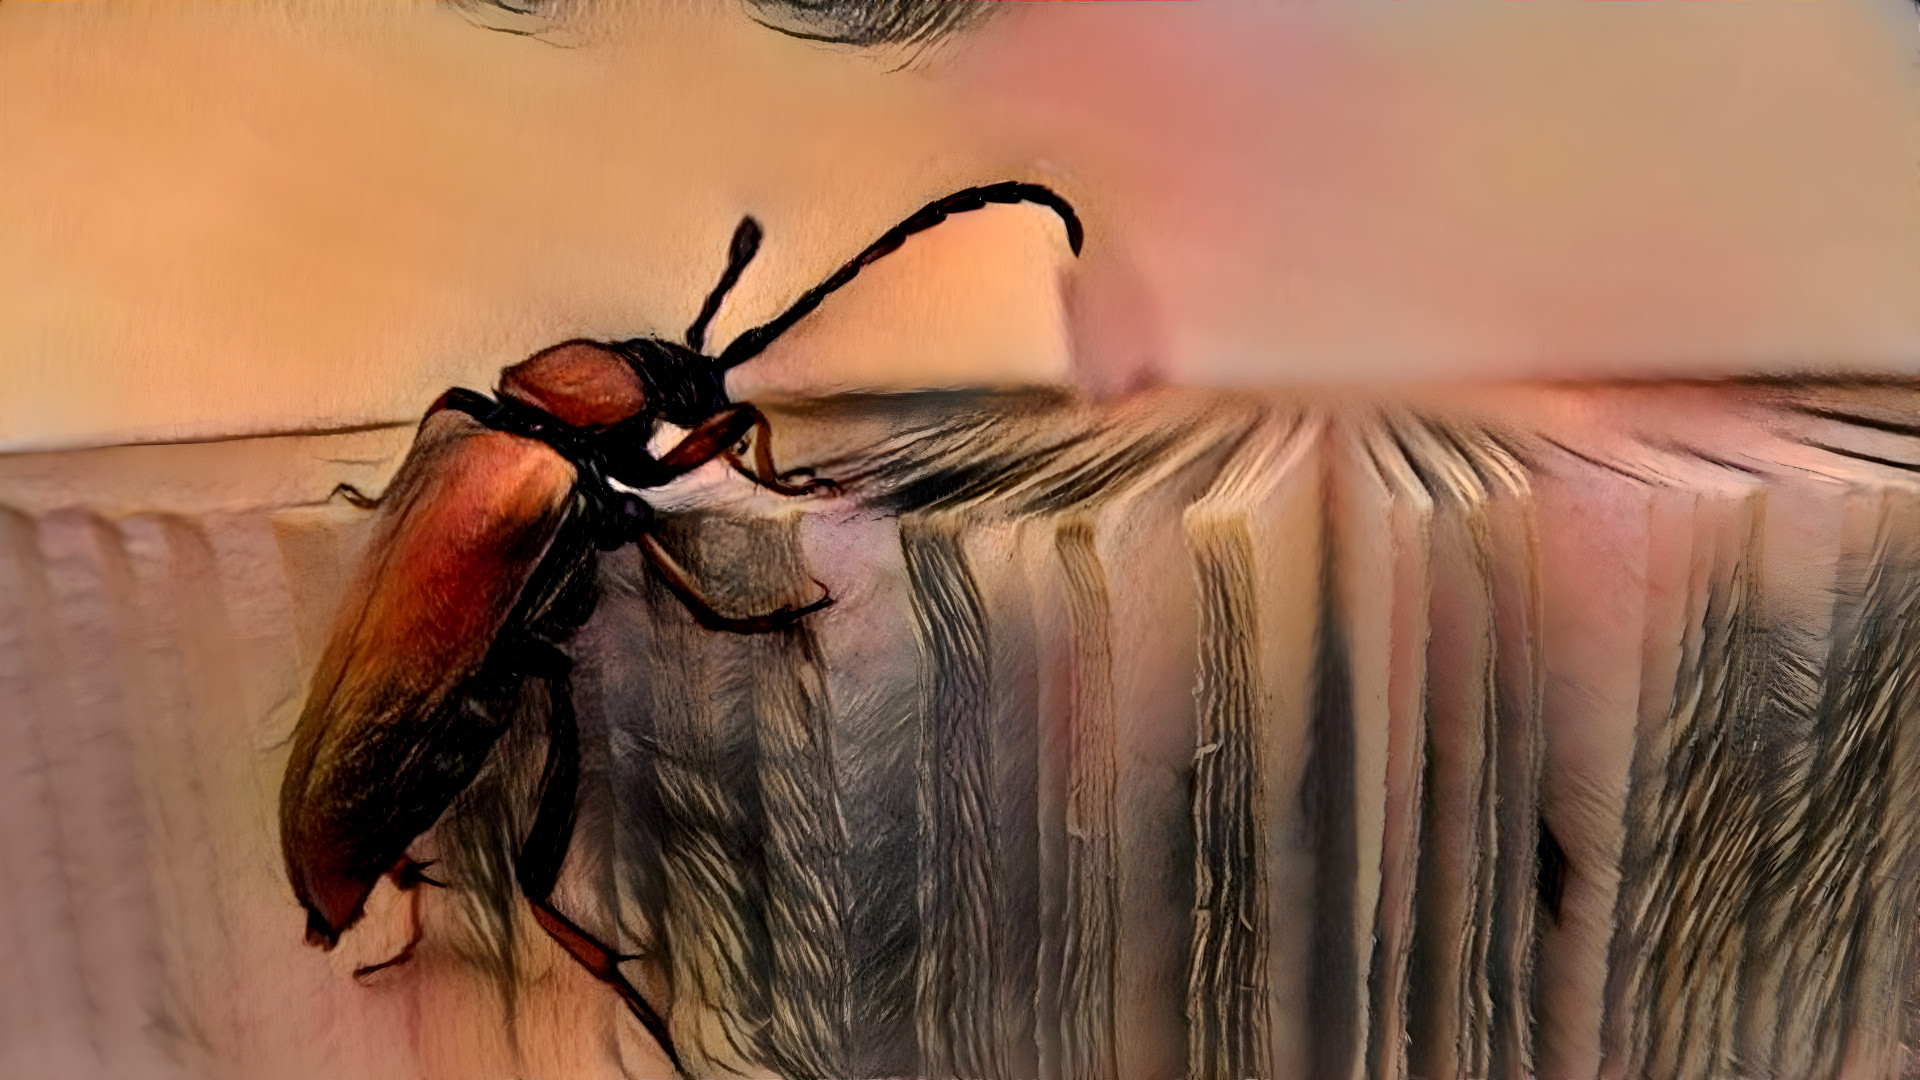 Book Beetle